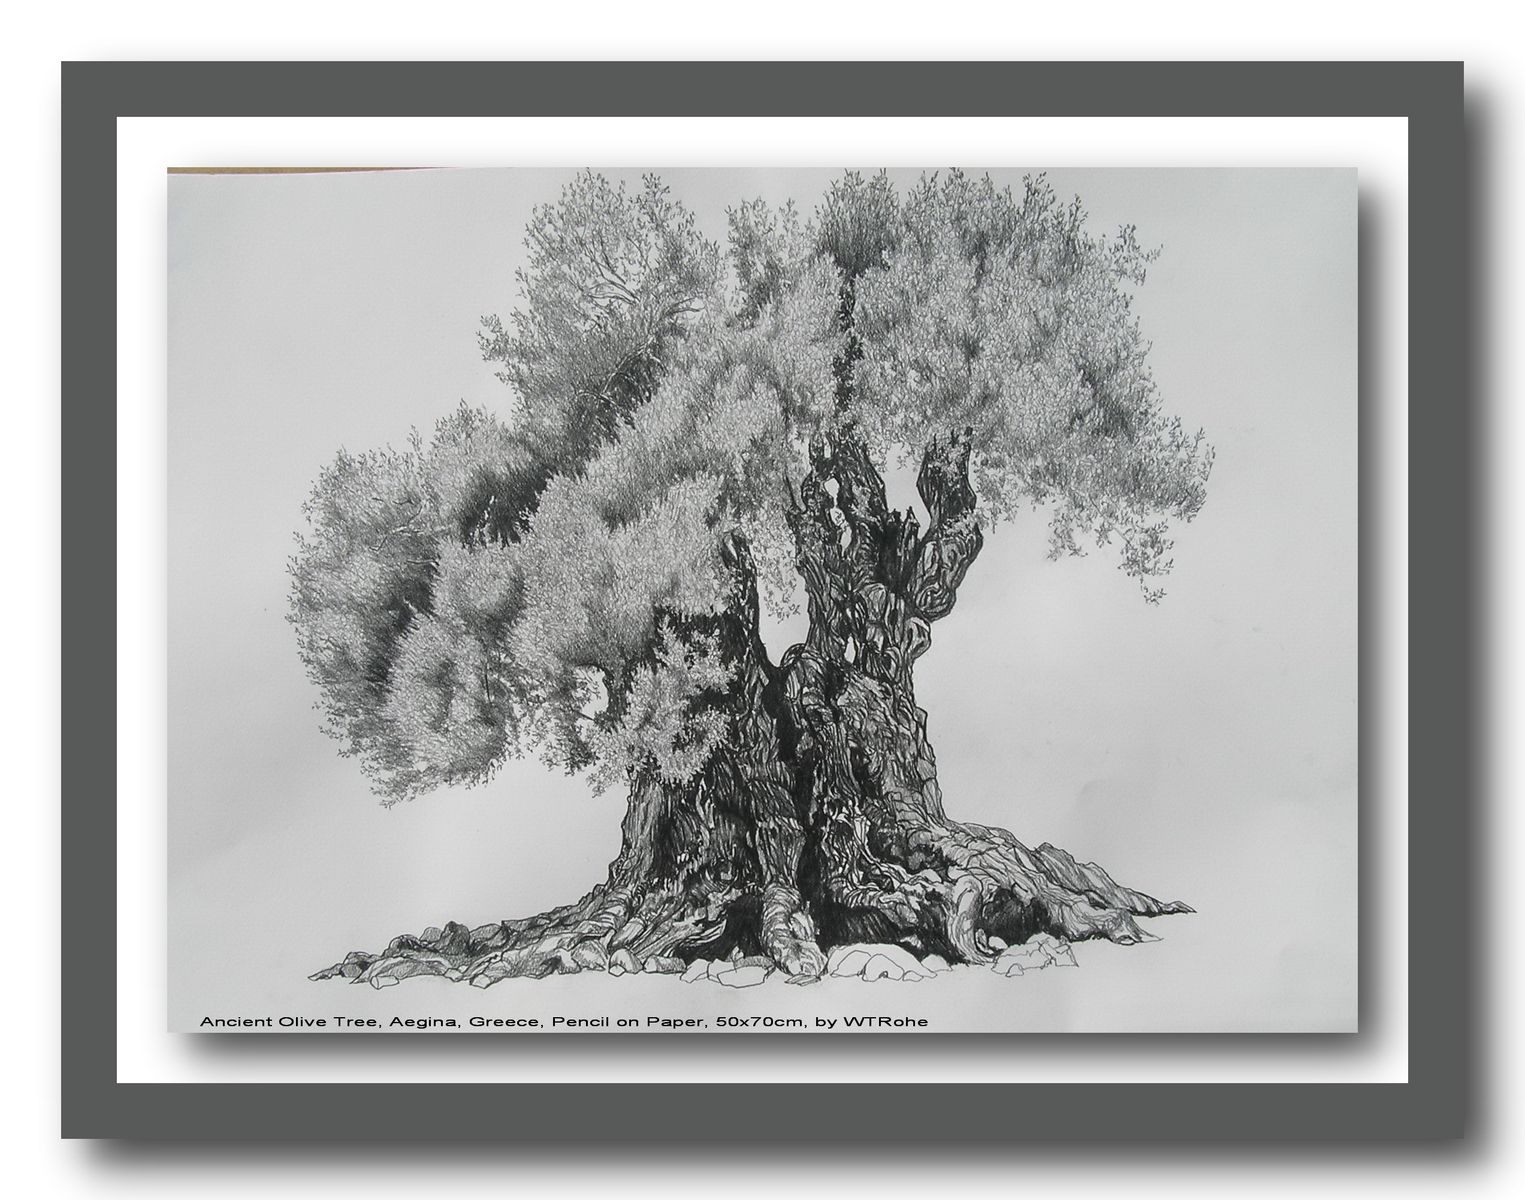 Ancient Olive Tree, Aegina, Greece